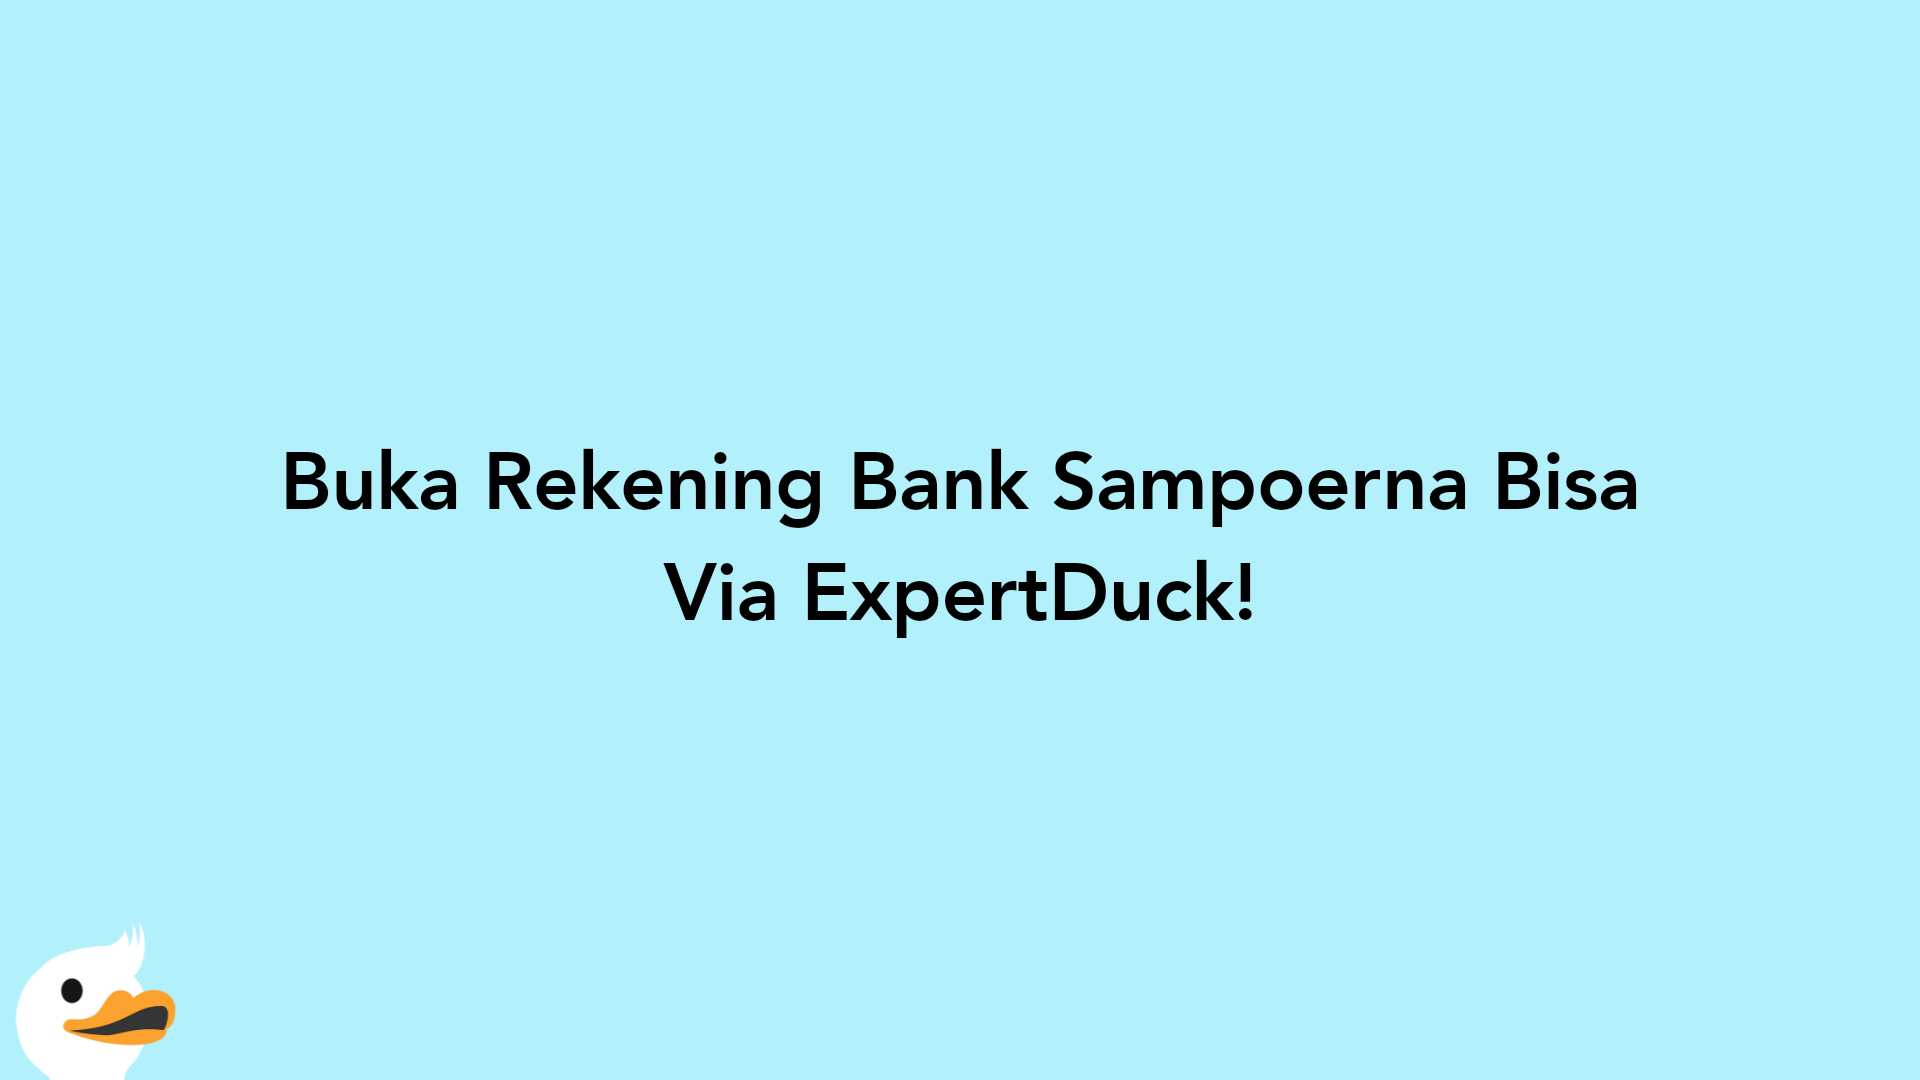 Buka Rekening Bank Sampoerna Bisa Via ExpertDuck!